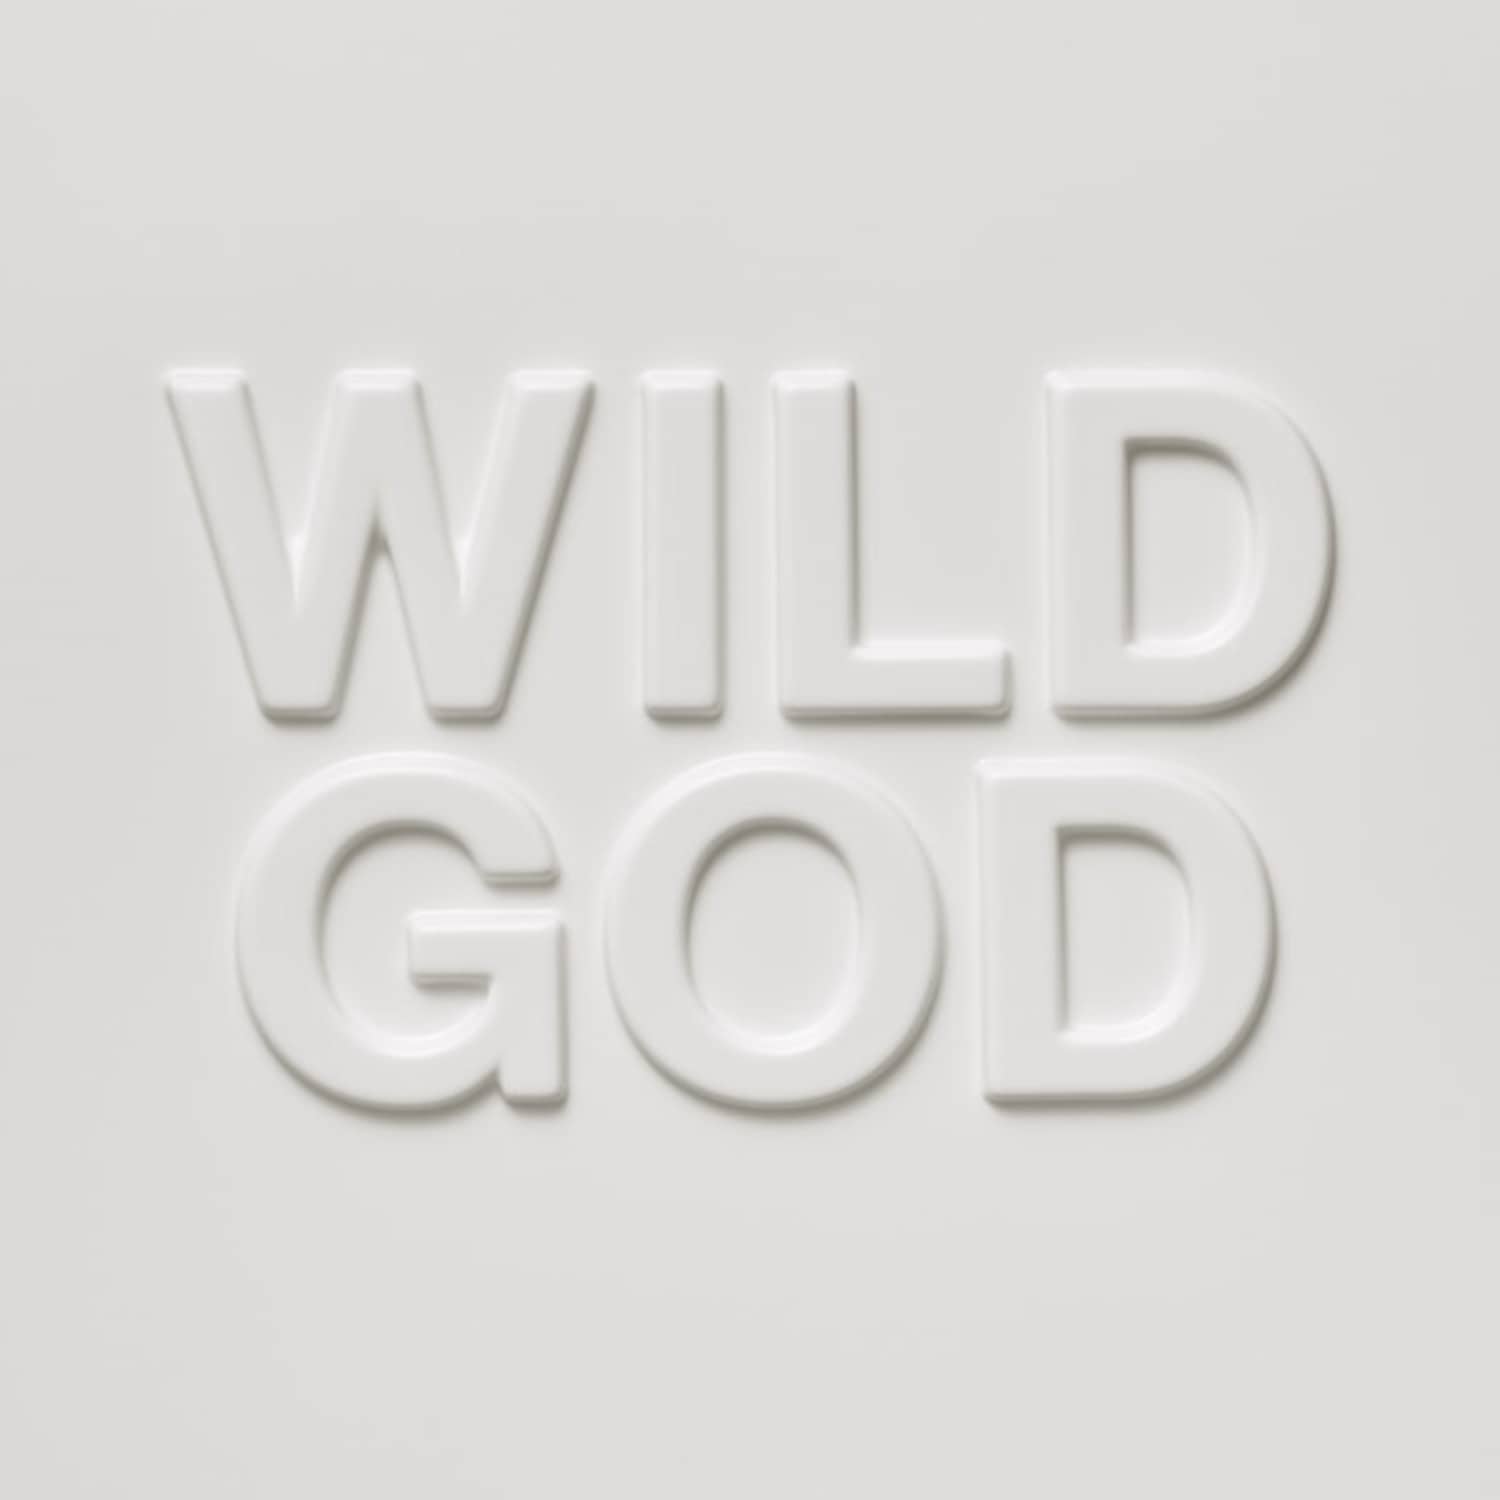 Nick Cave & The Bad Seeds - WILD GOD 